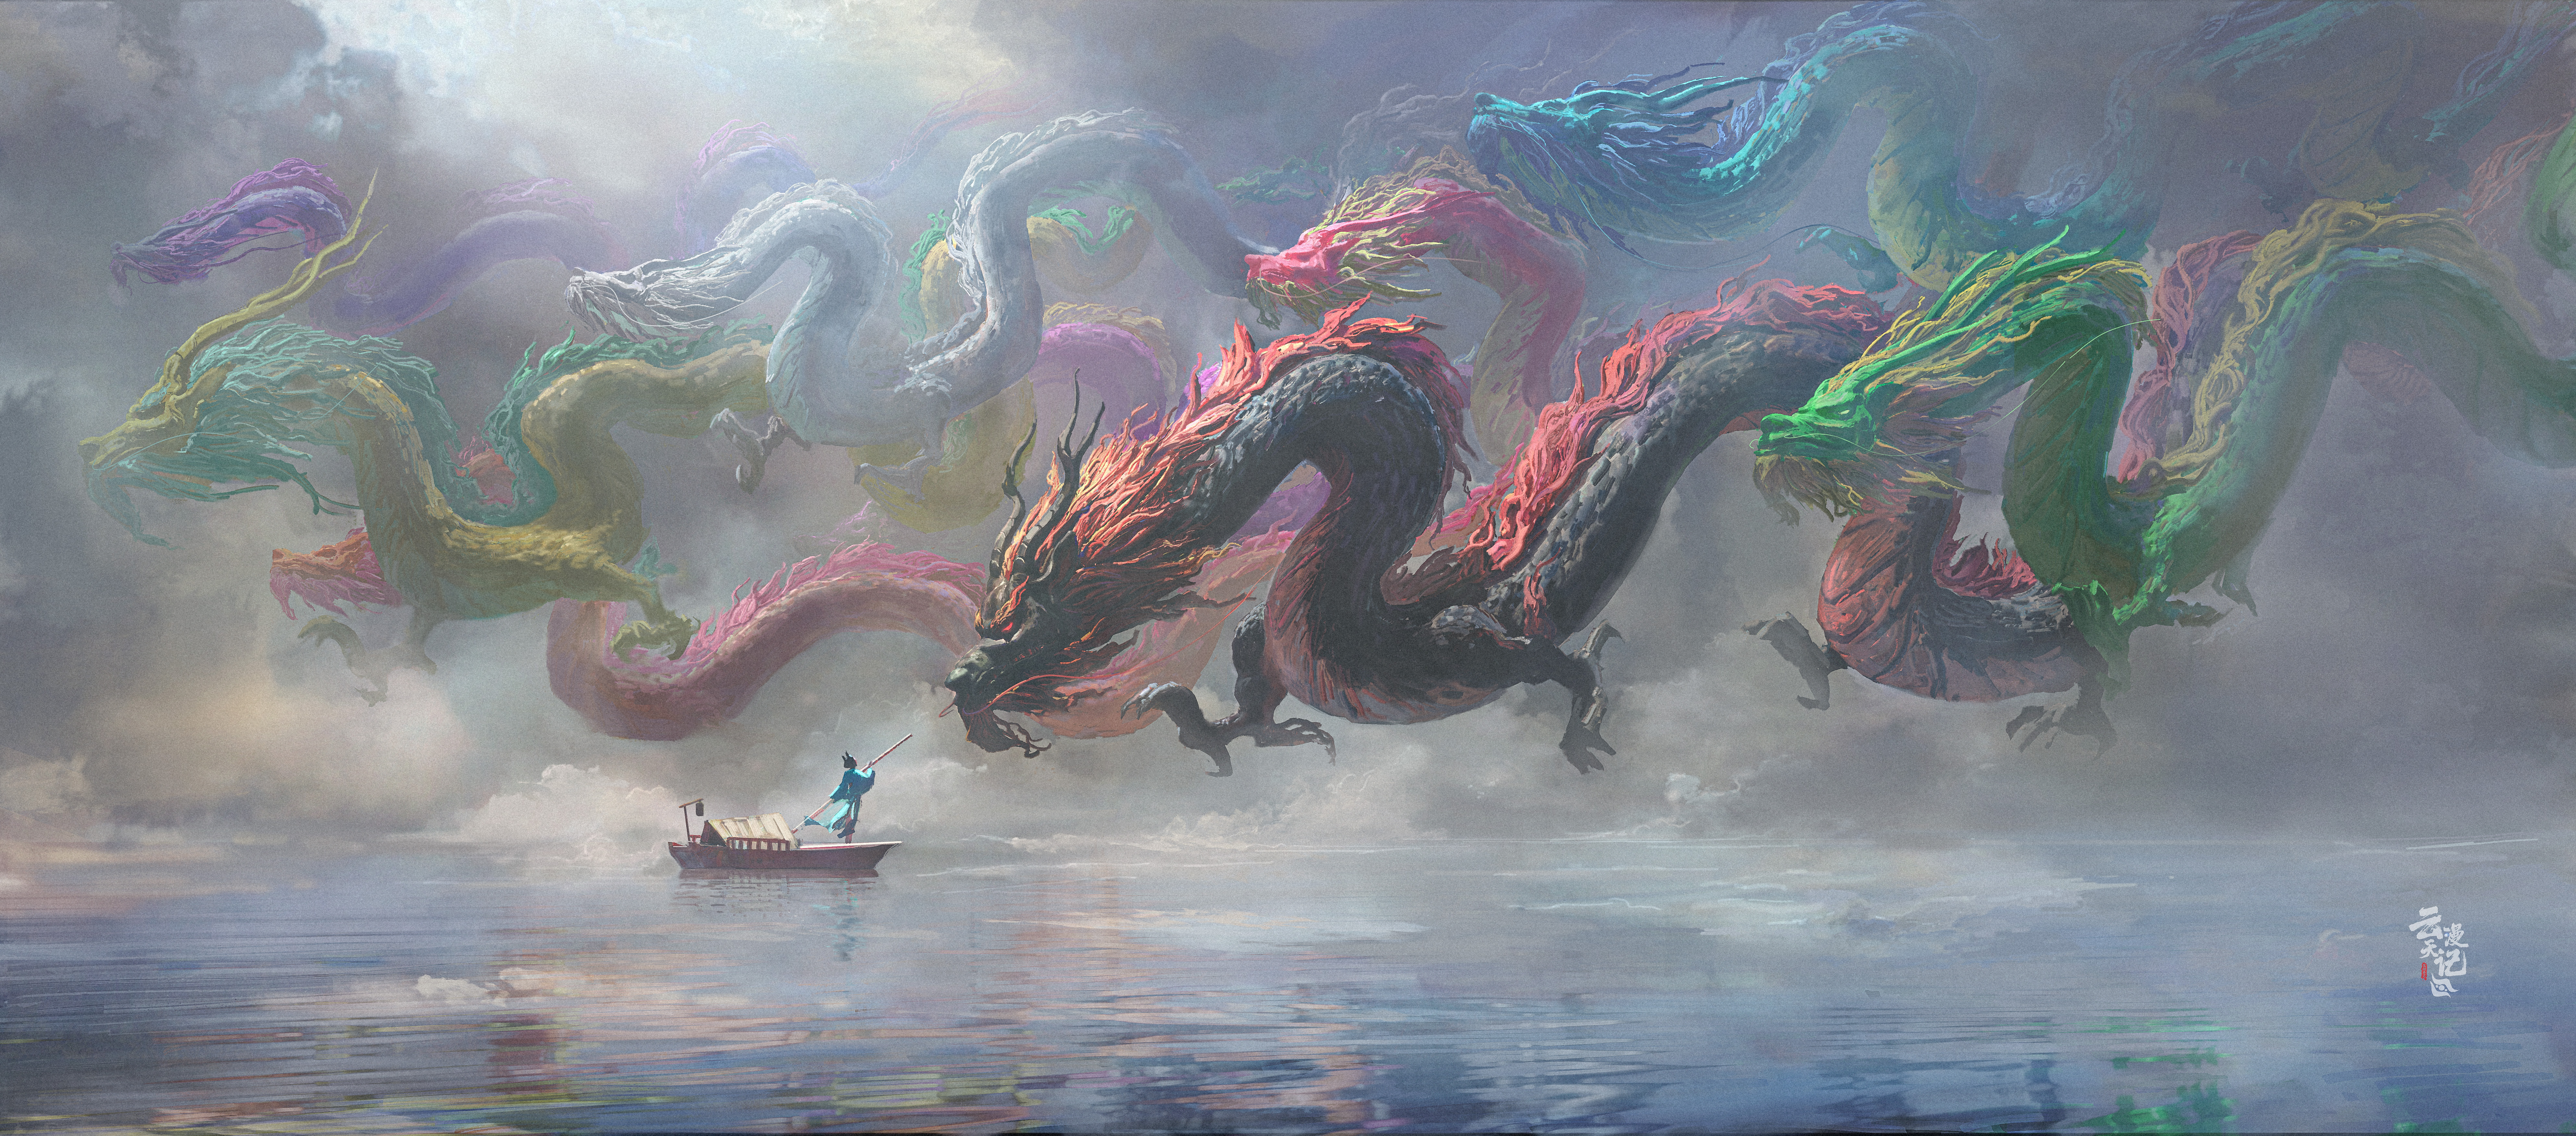 General 7939x3500 chibaolin digital art artwork illustration fantasy art dragon animals sea boat water wide screen watermarked ultrawide mist Chinese dragon